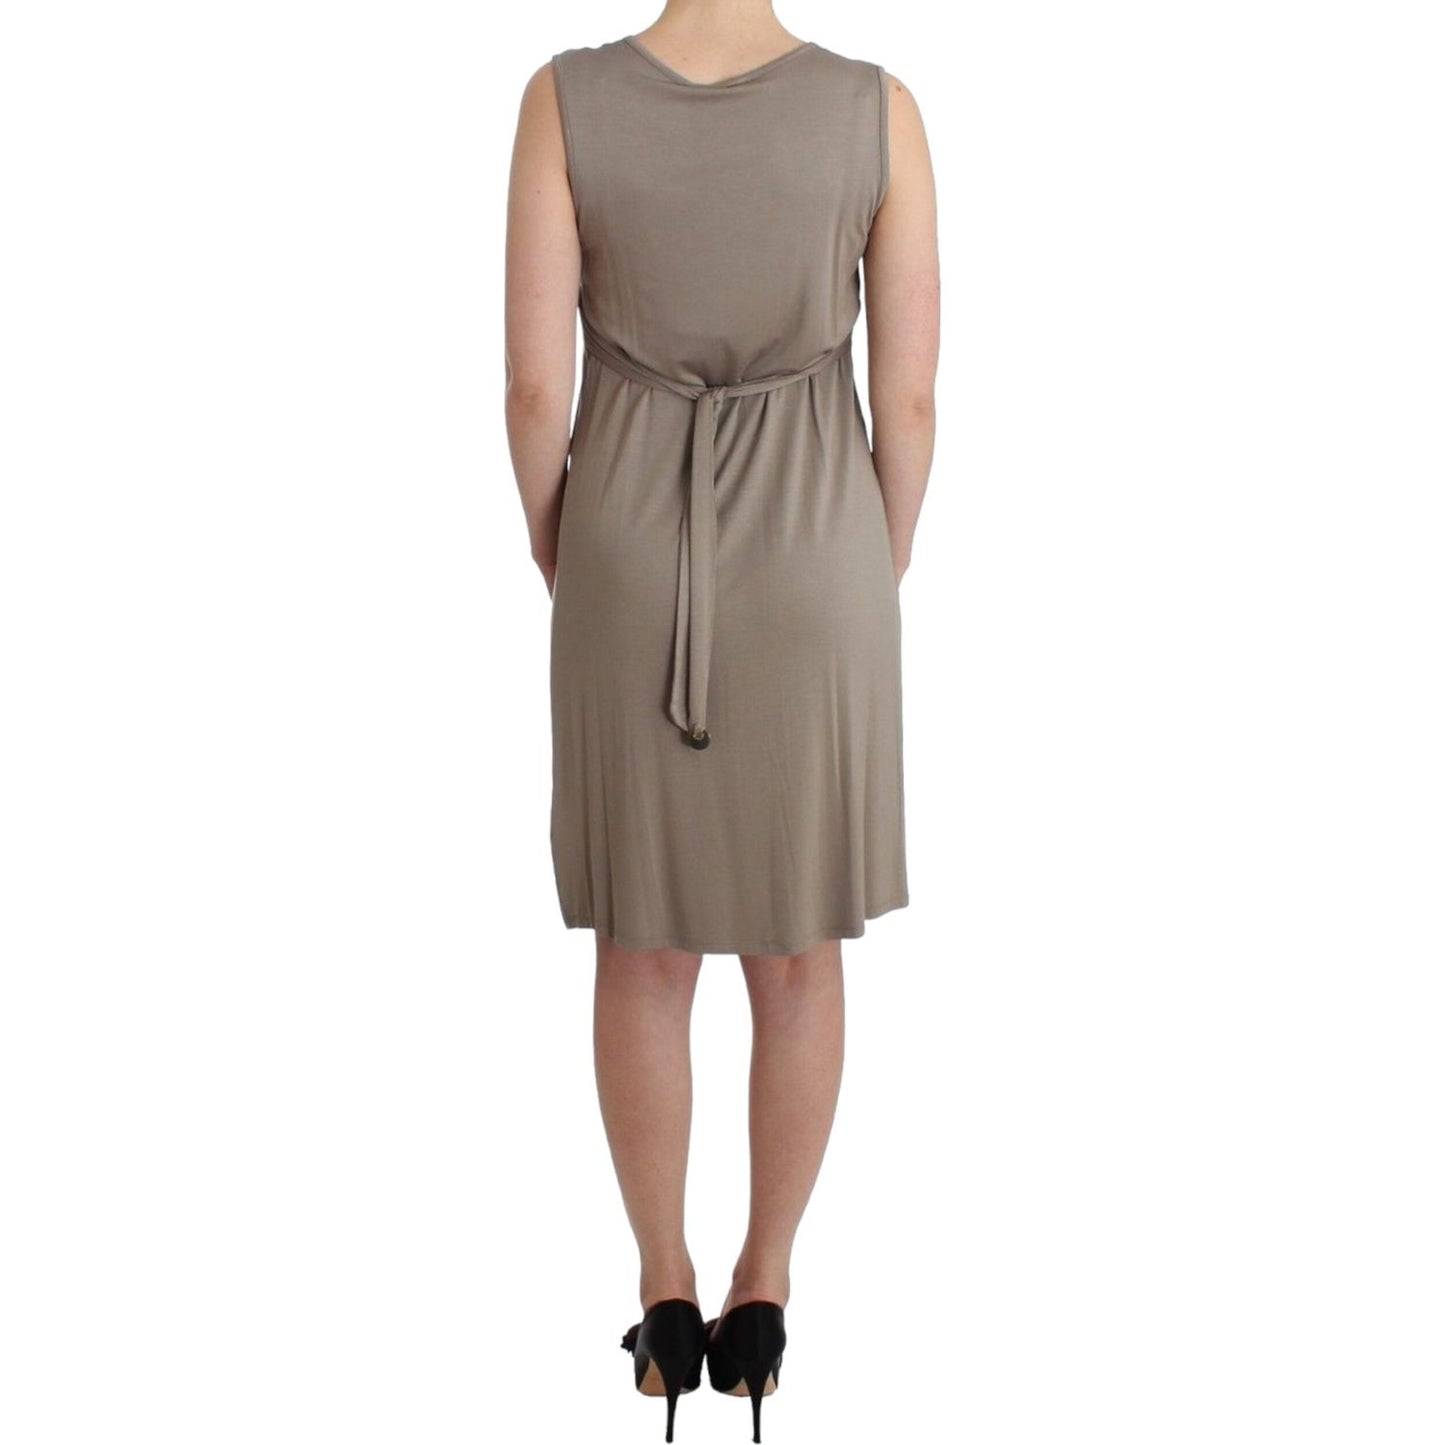 Roccobarocco Studded Sheath Knee-Length Dress in Beige khaki-studded-sheath-dress 2800-khaki-studded-sheath-dress-2-scaled-0c1b2ad5-c79.jpg